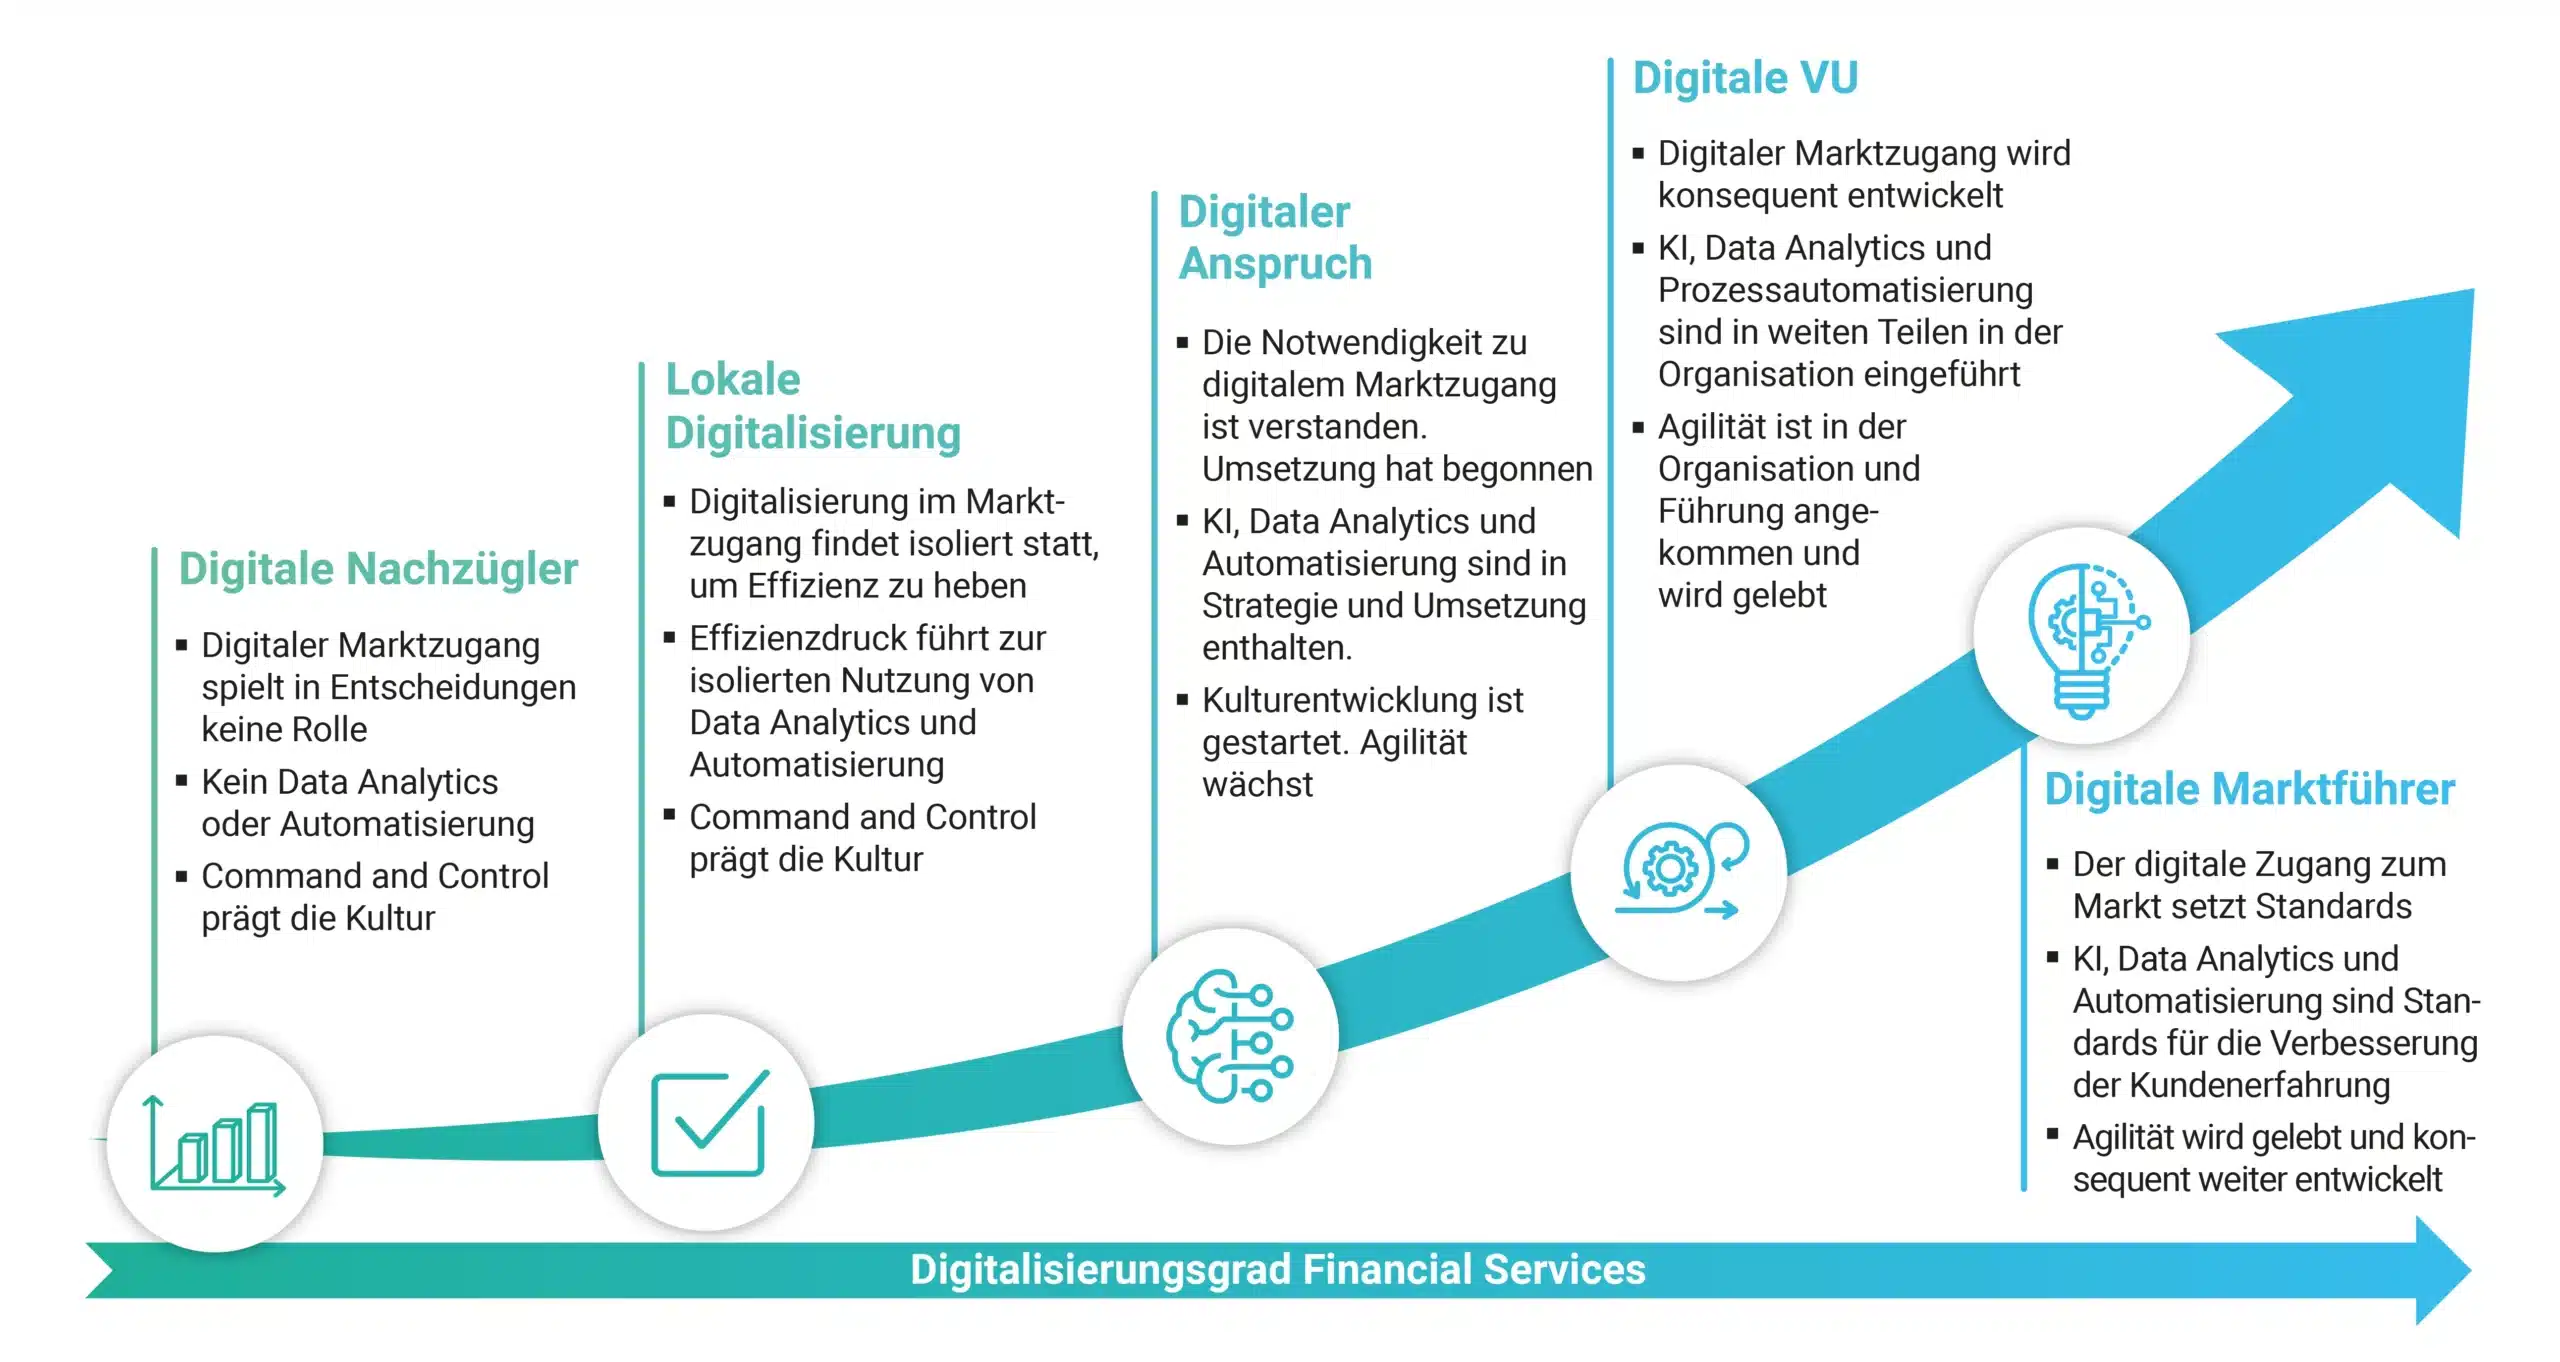 Financial Services digitalisierungsgrad scaled